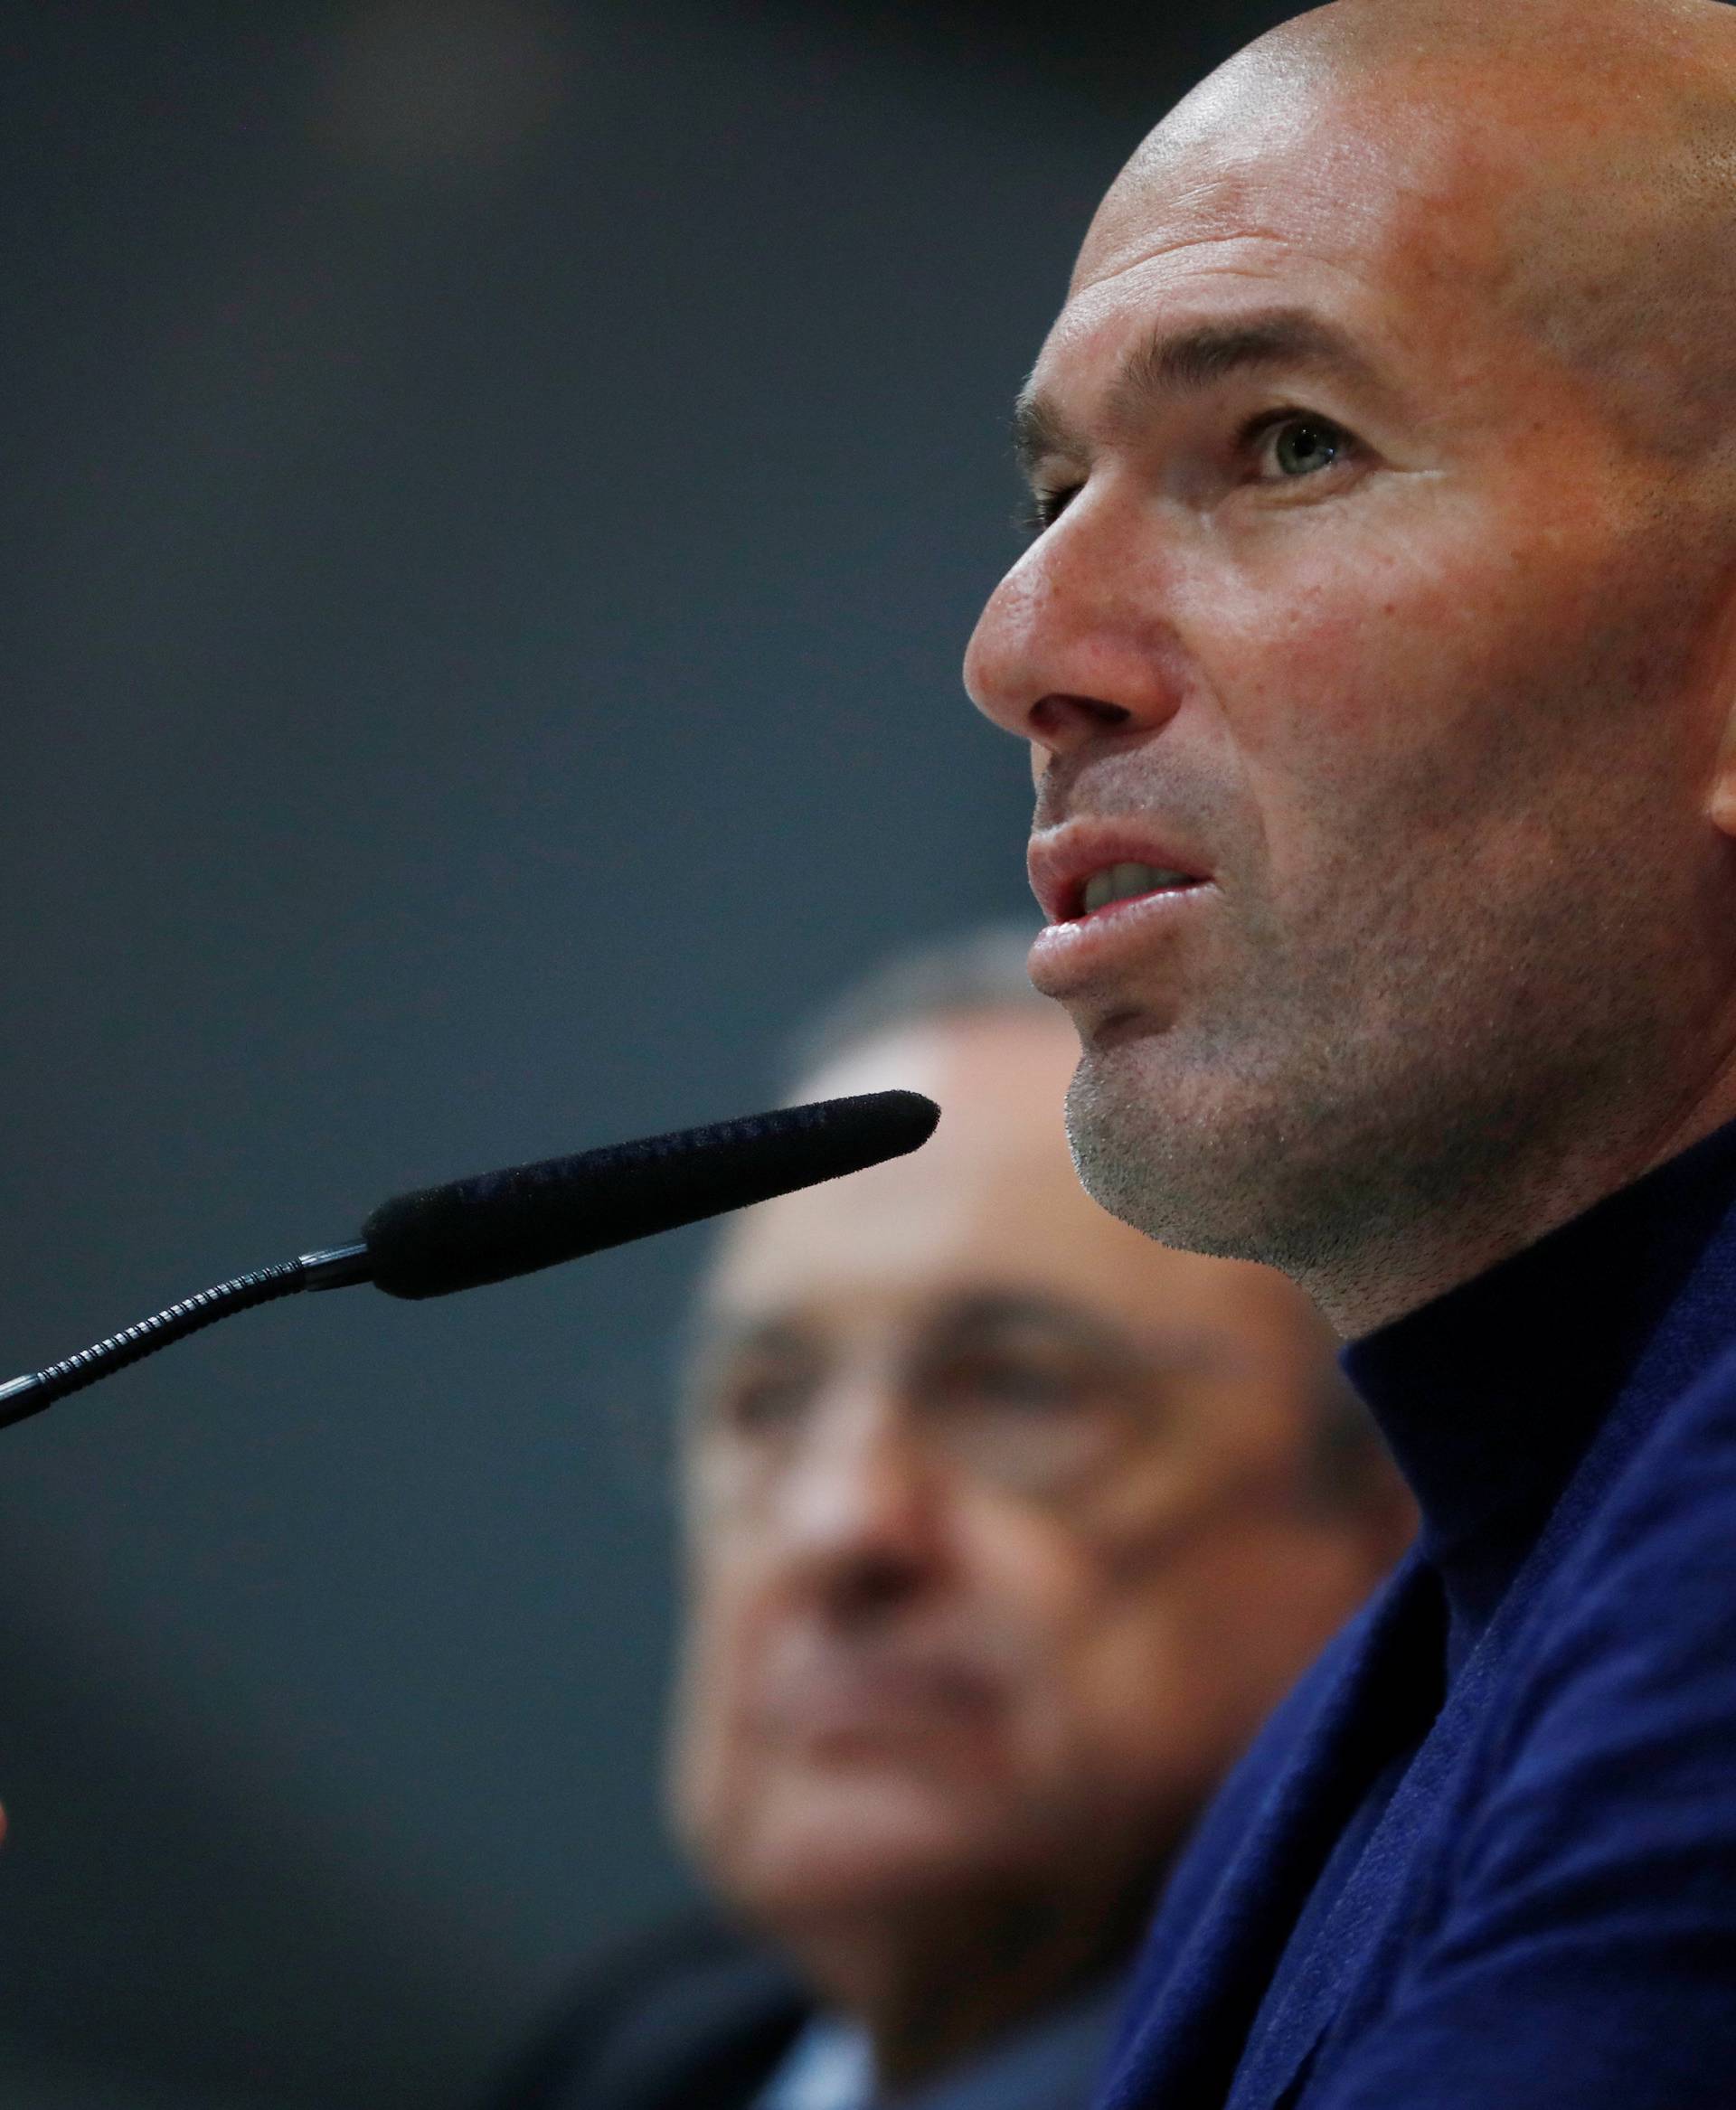 Real Madrid - Zinedine Zidane Press Conference